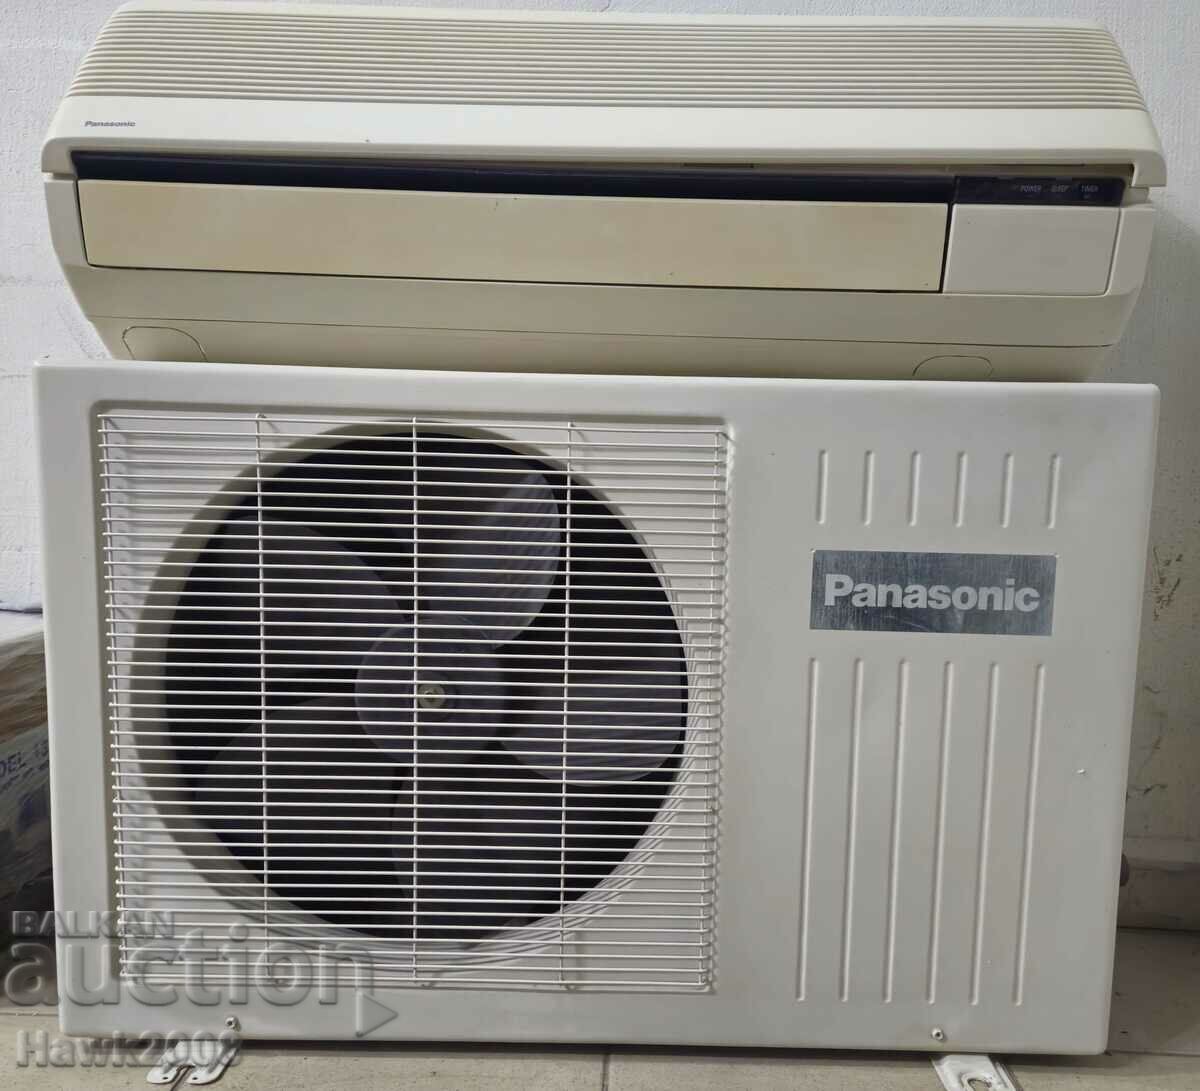 Aparat de aer conditionat Panasonic original Panasonic CU-A120KE